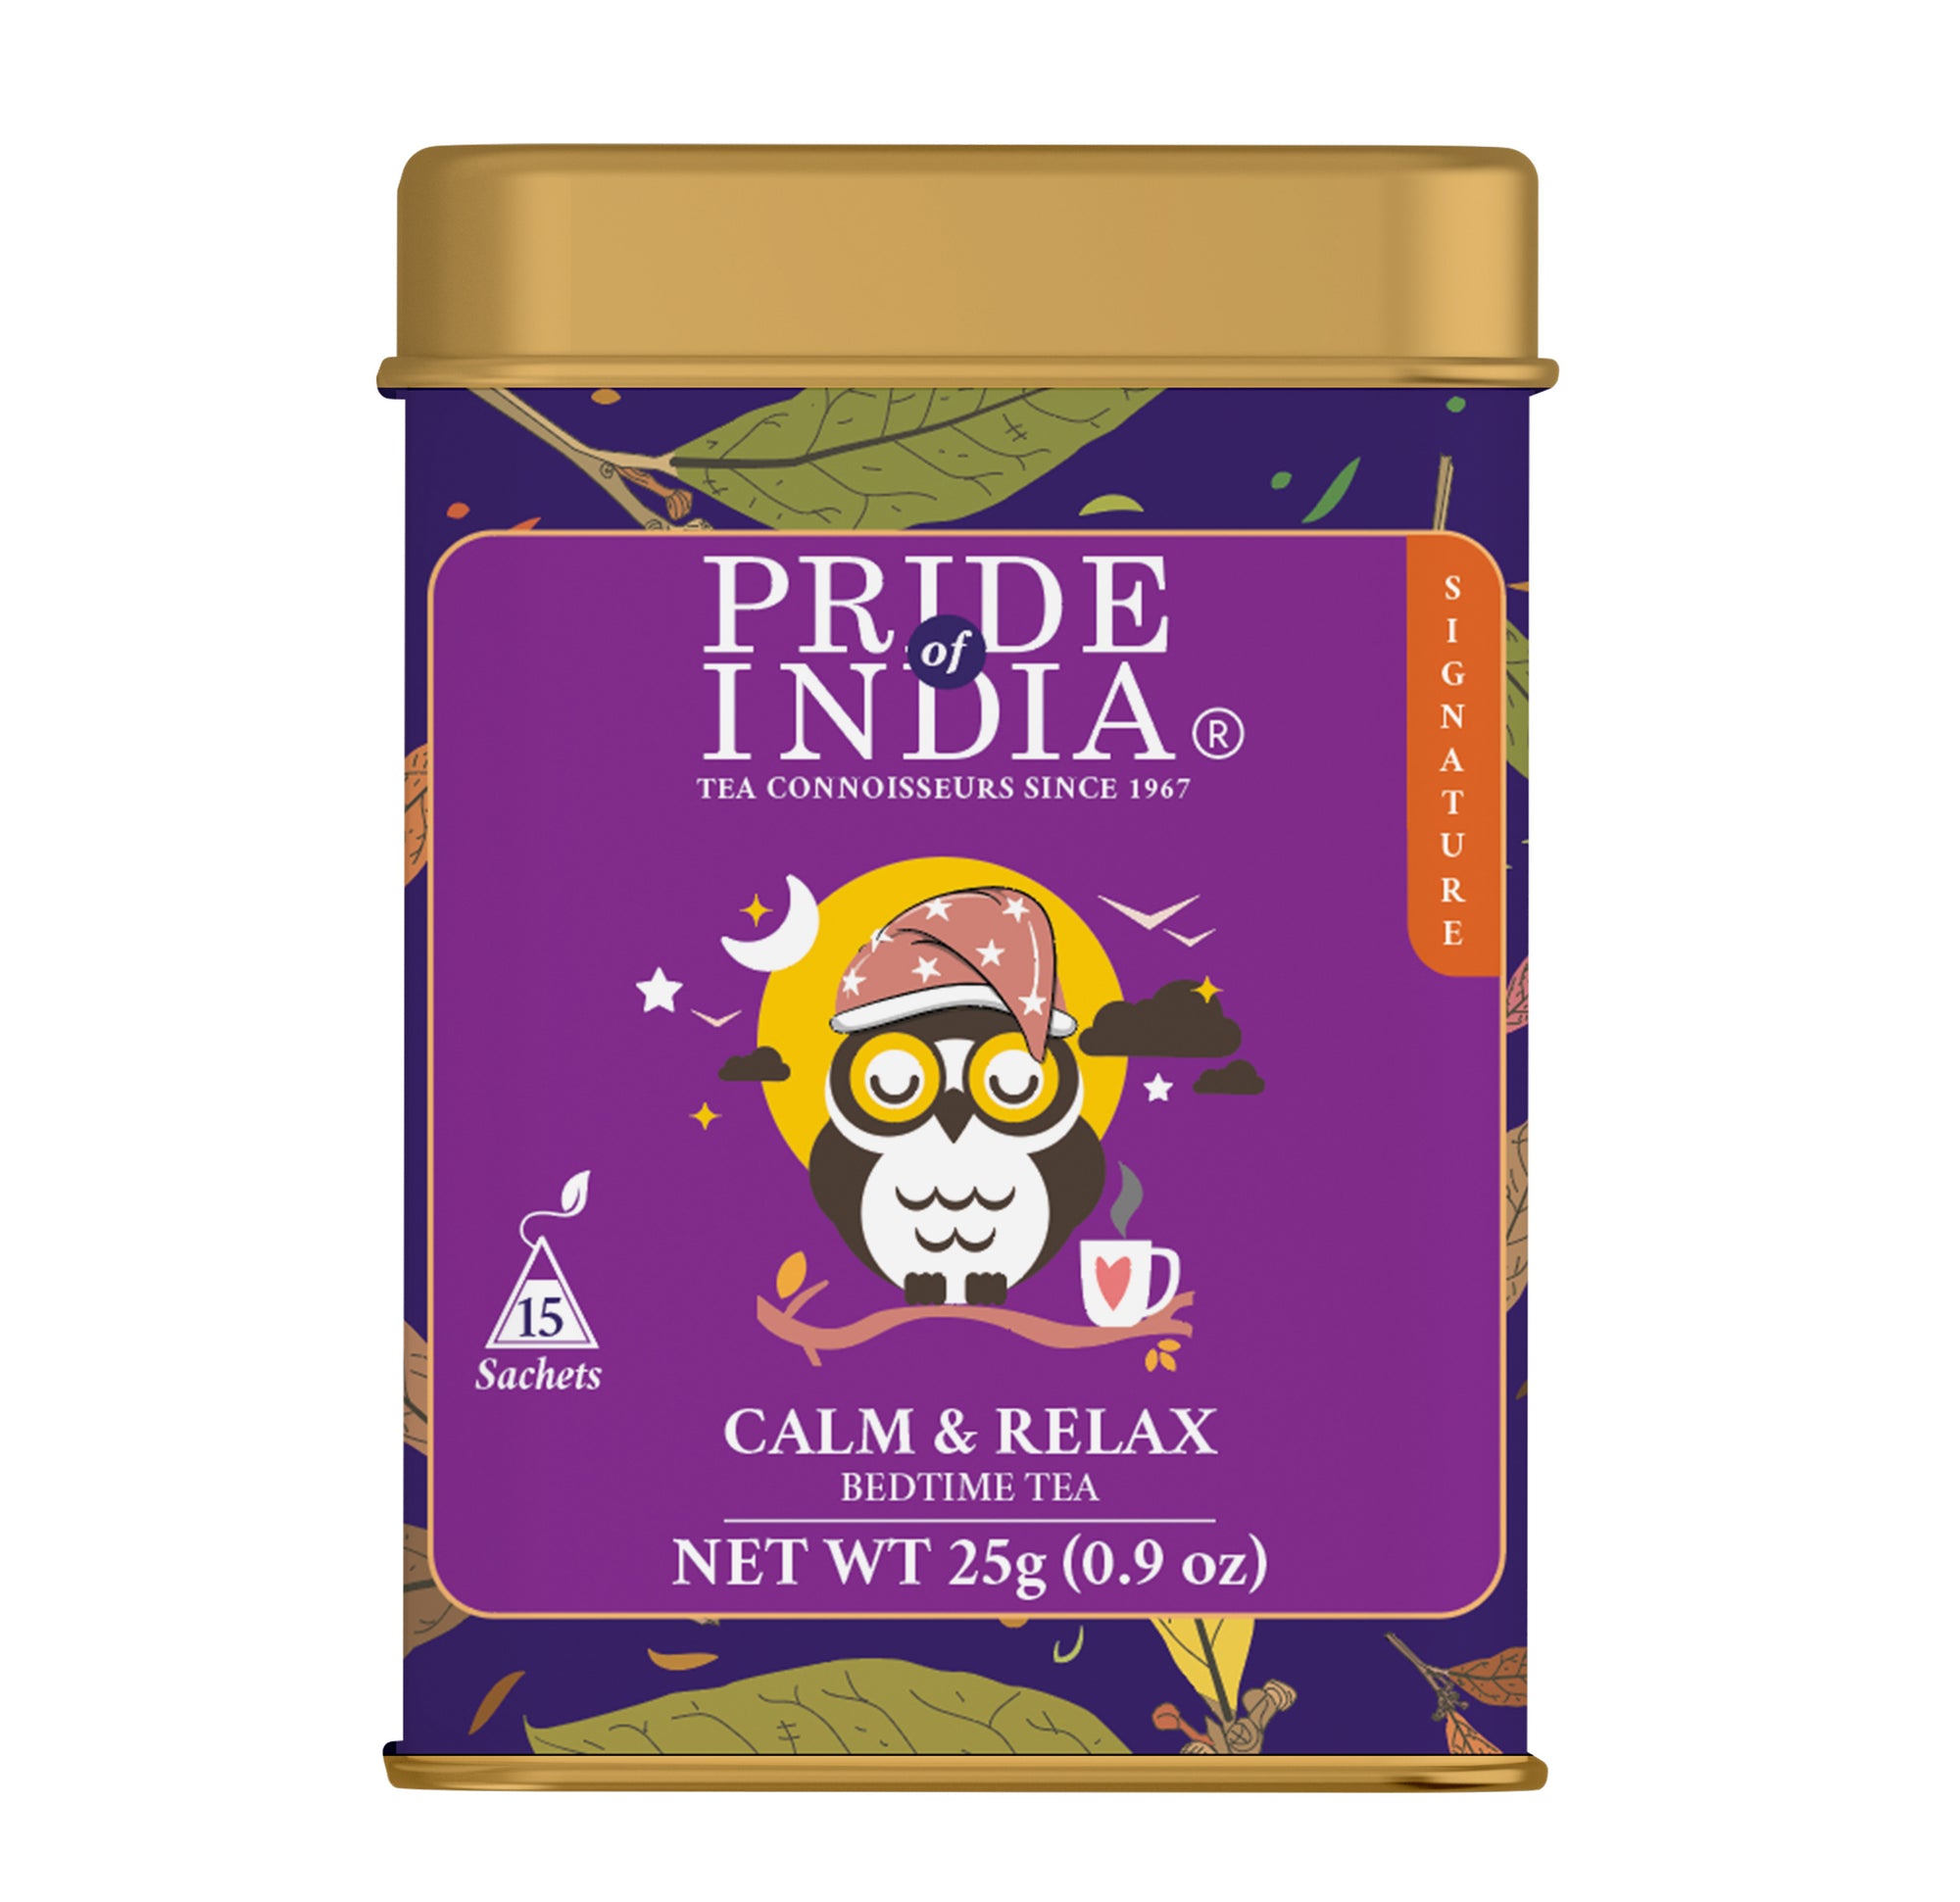 Calm & Relax - Bedtime Tea Bags - Pride Of India